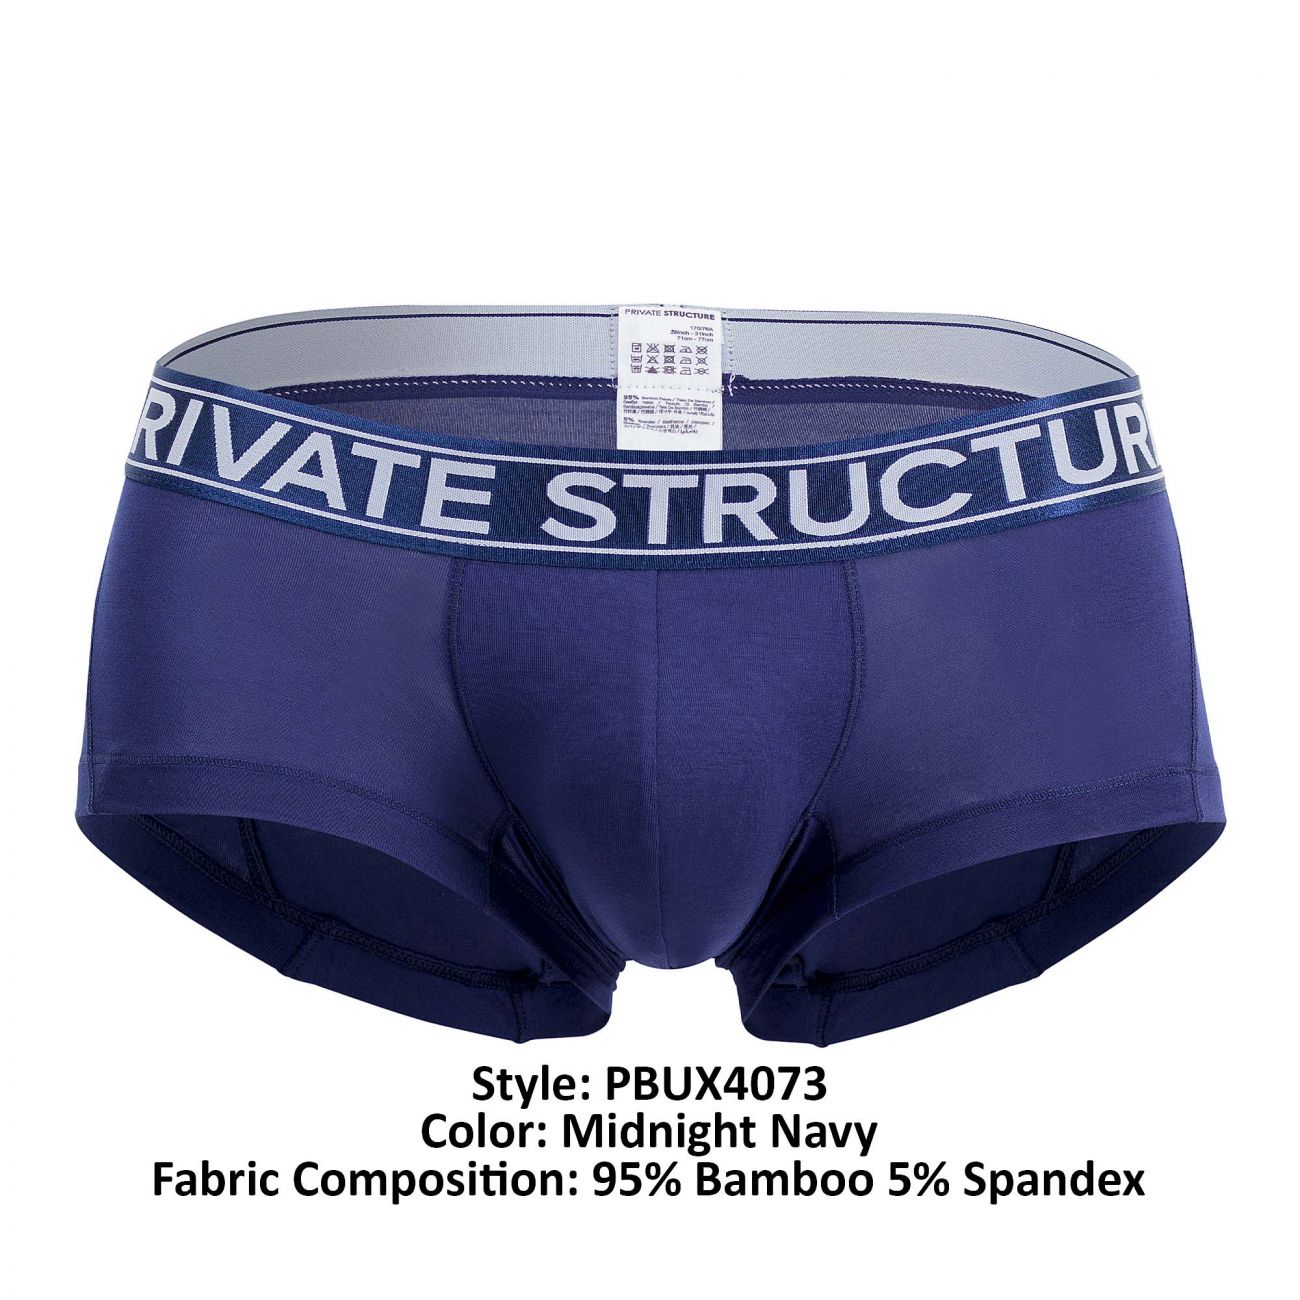 Mens Underwear: Private-Structure PBUX4073 Platinum Bamboo Trunks | eBay